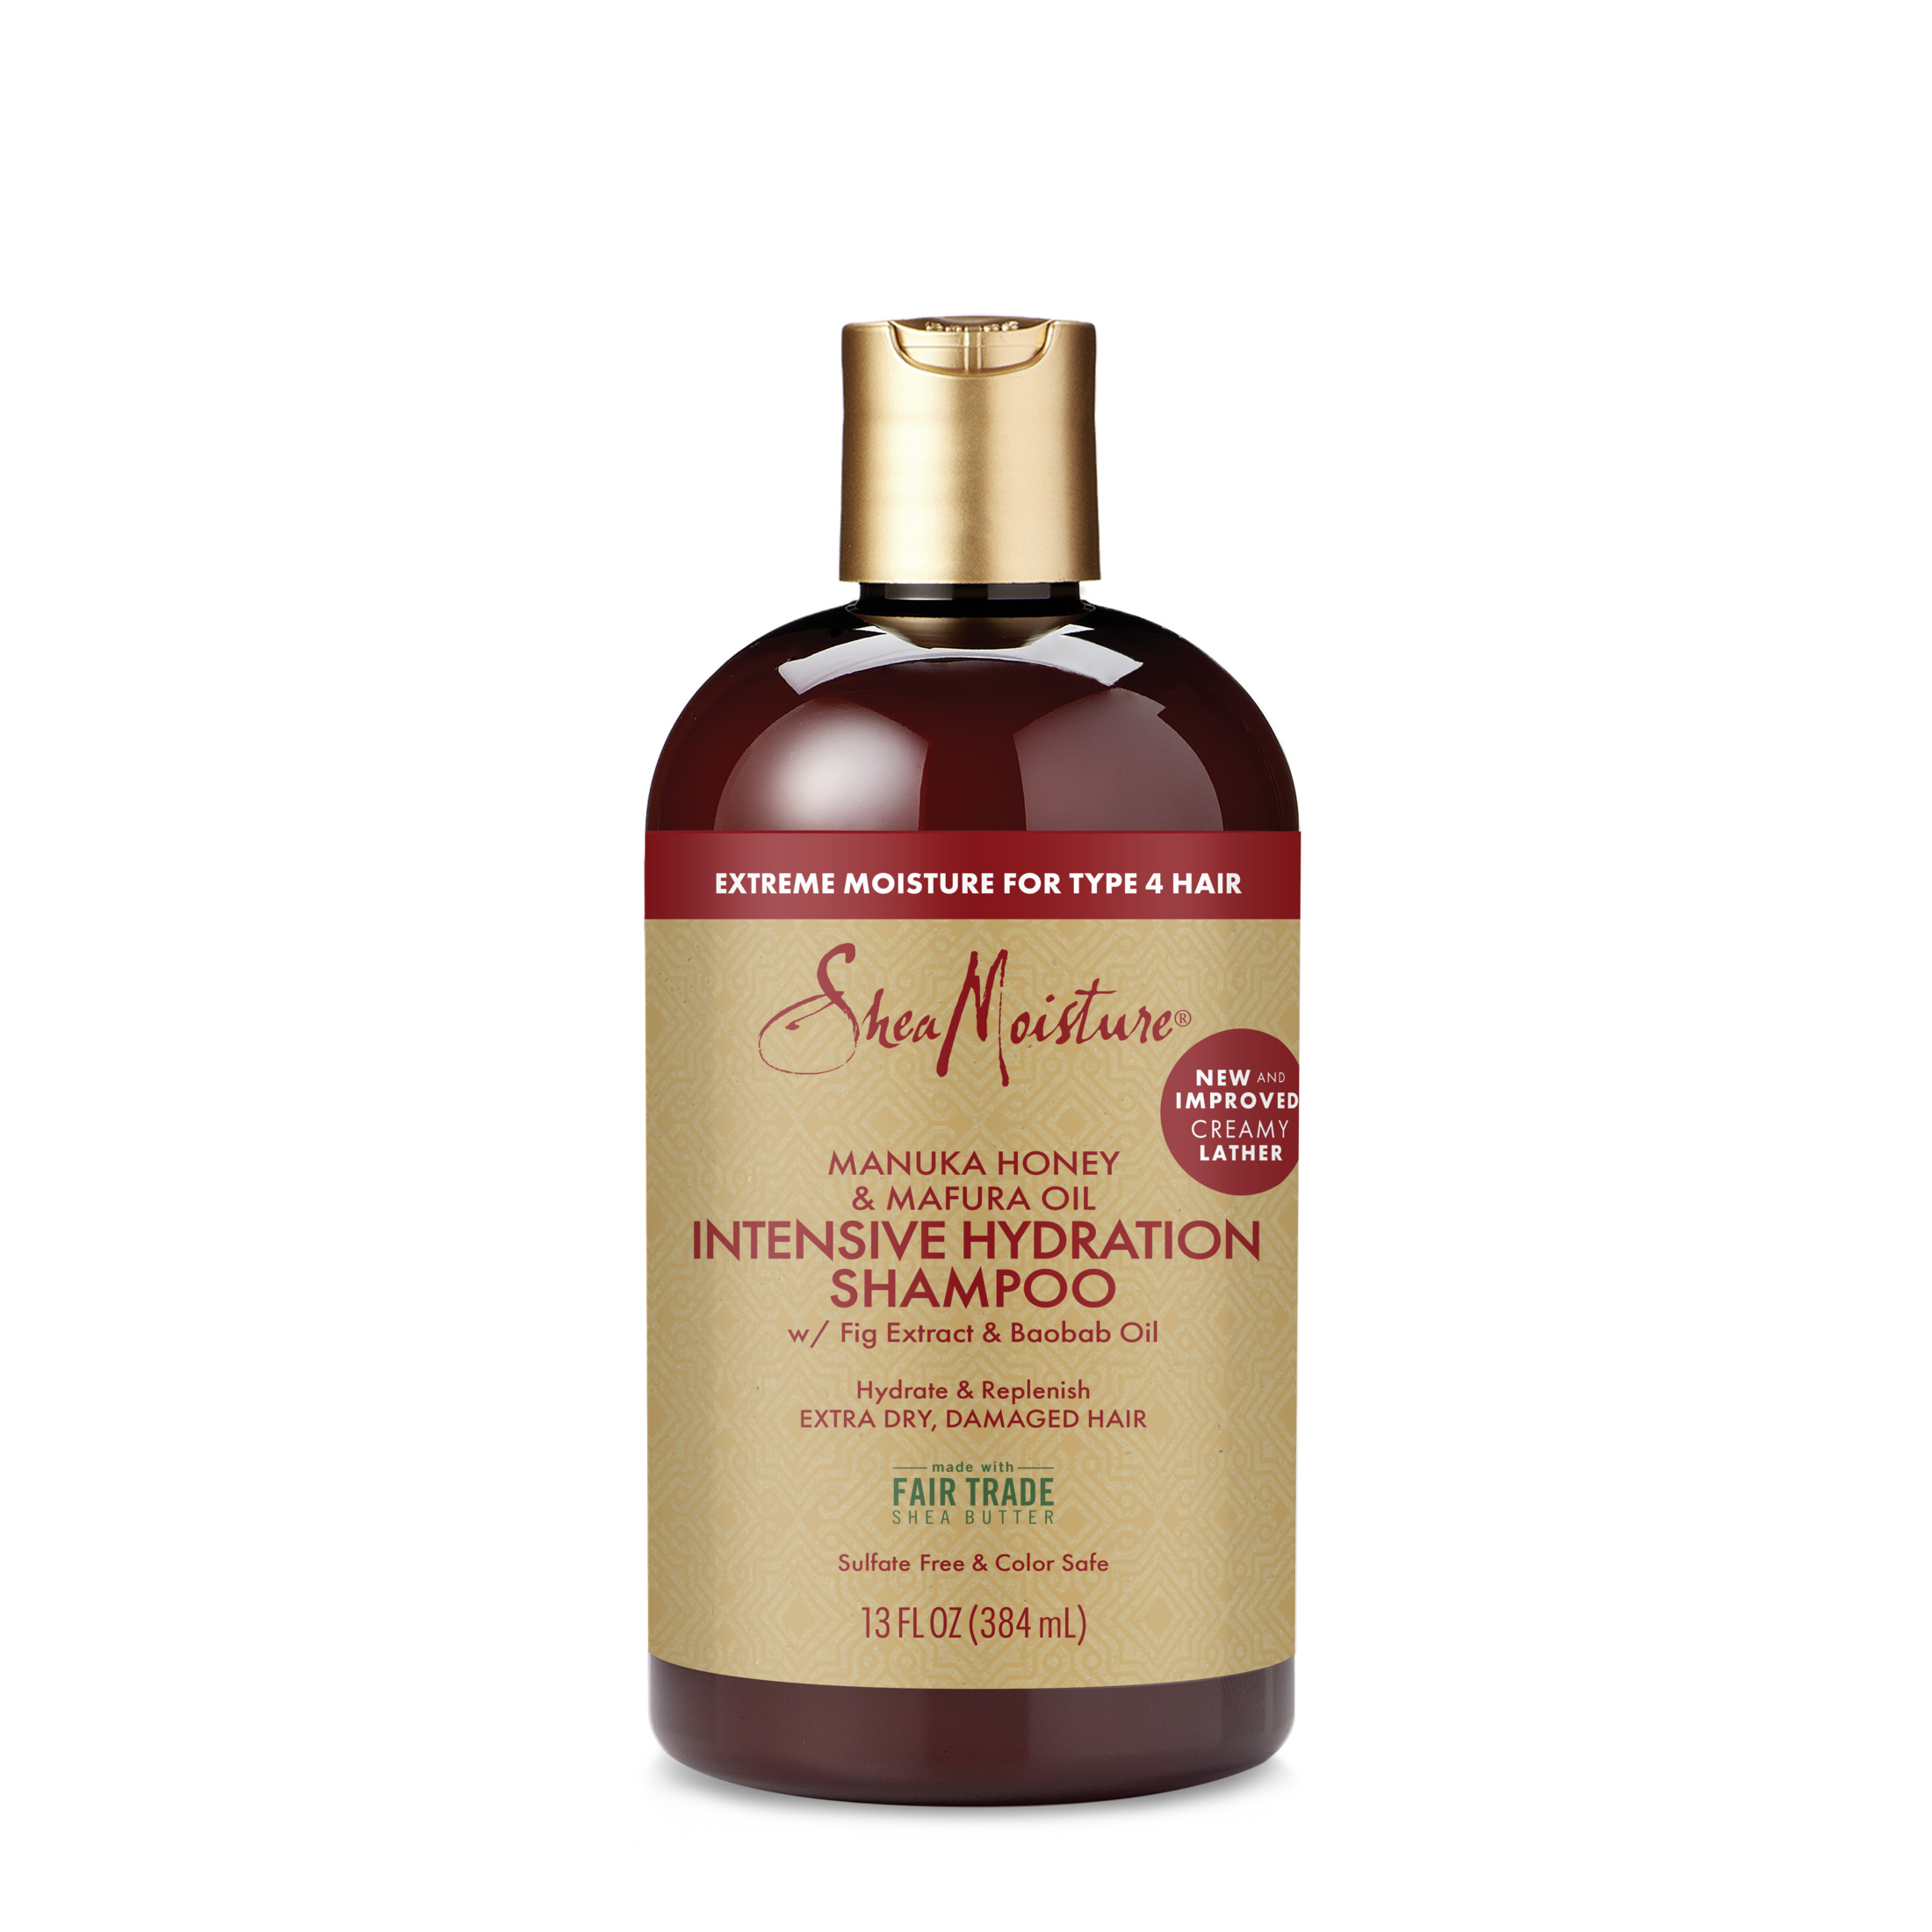 SheaMoisture Intensive Hydration Daily Shampoo for Damaged Hair, Manuka Honey & Mafura Oil, 13 fl oz - image 1 of 15